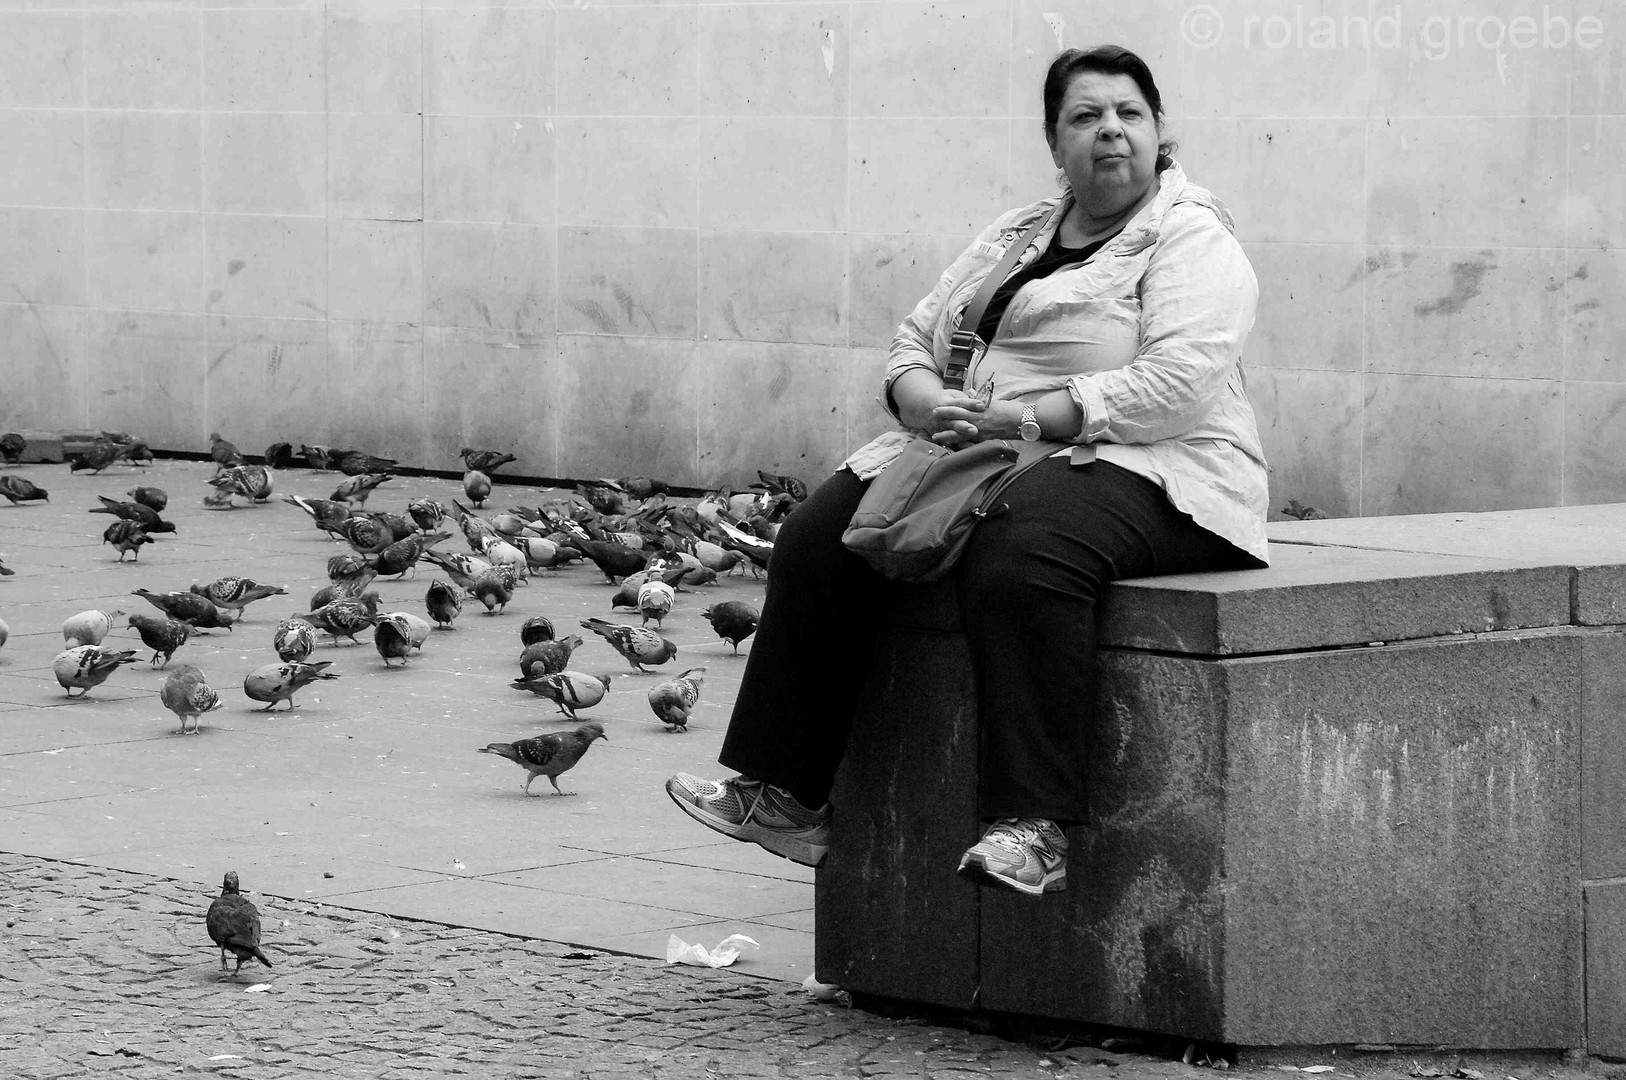 pigeon watching